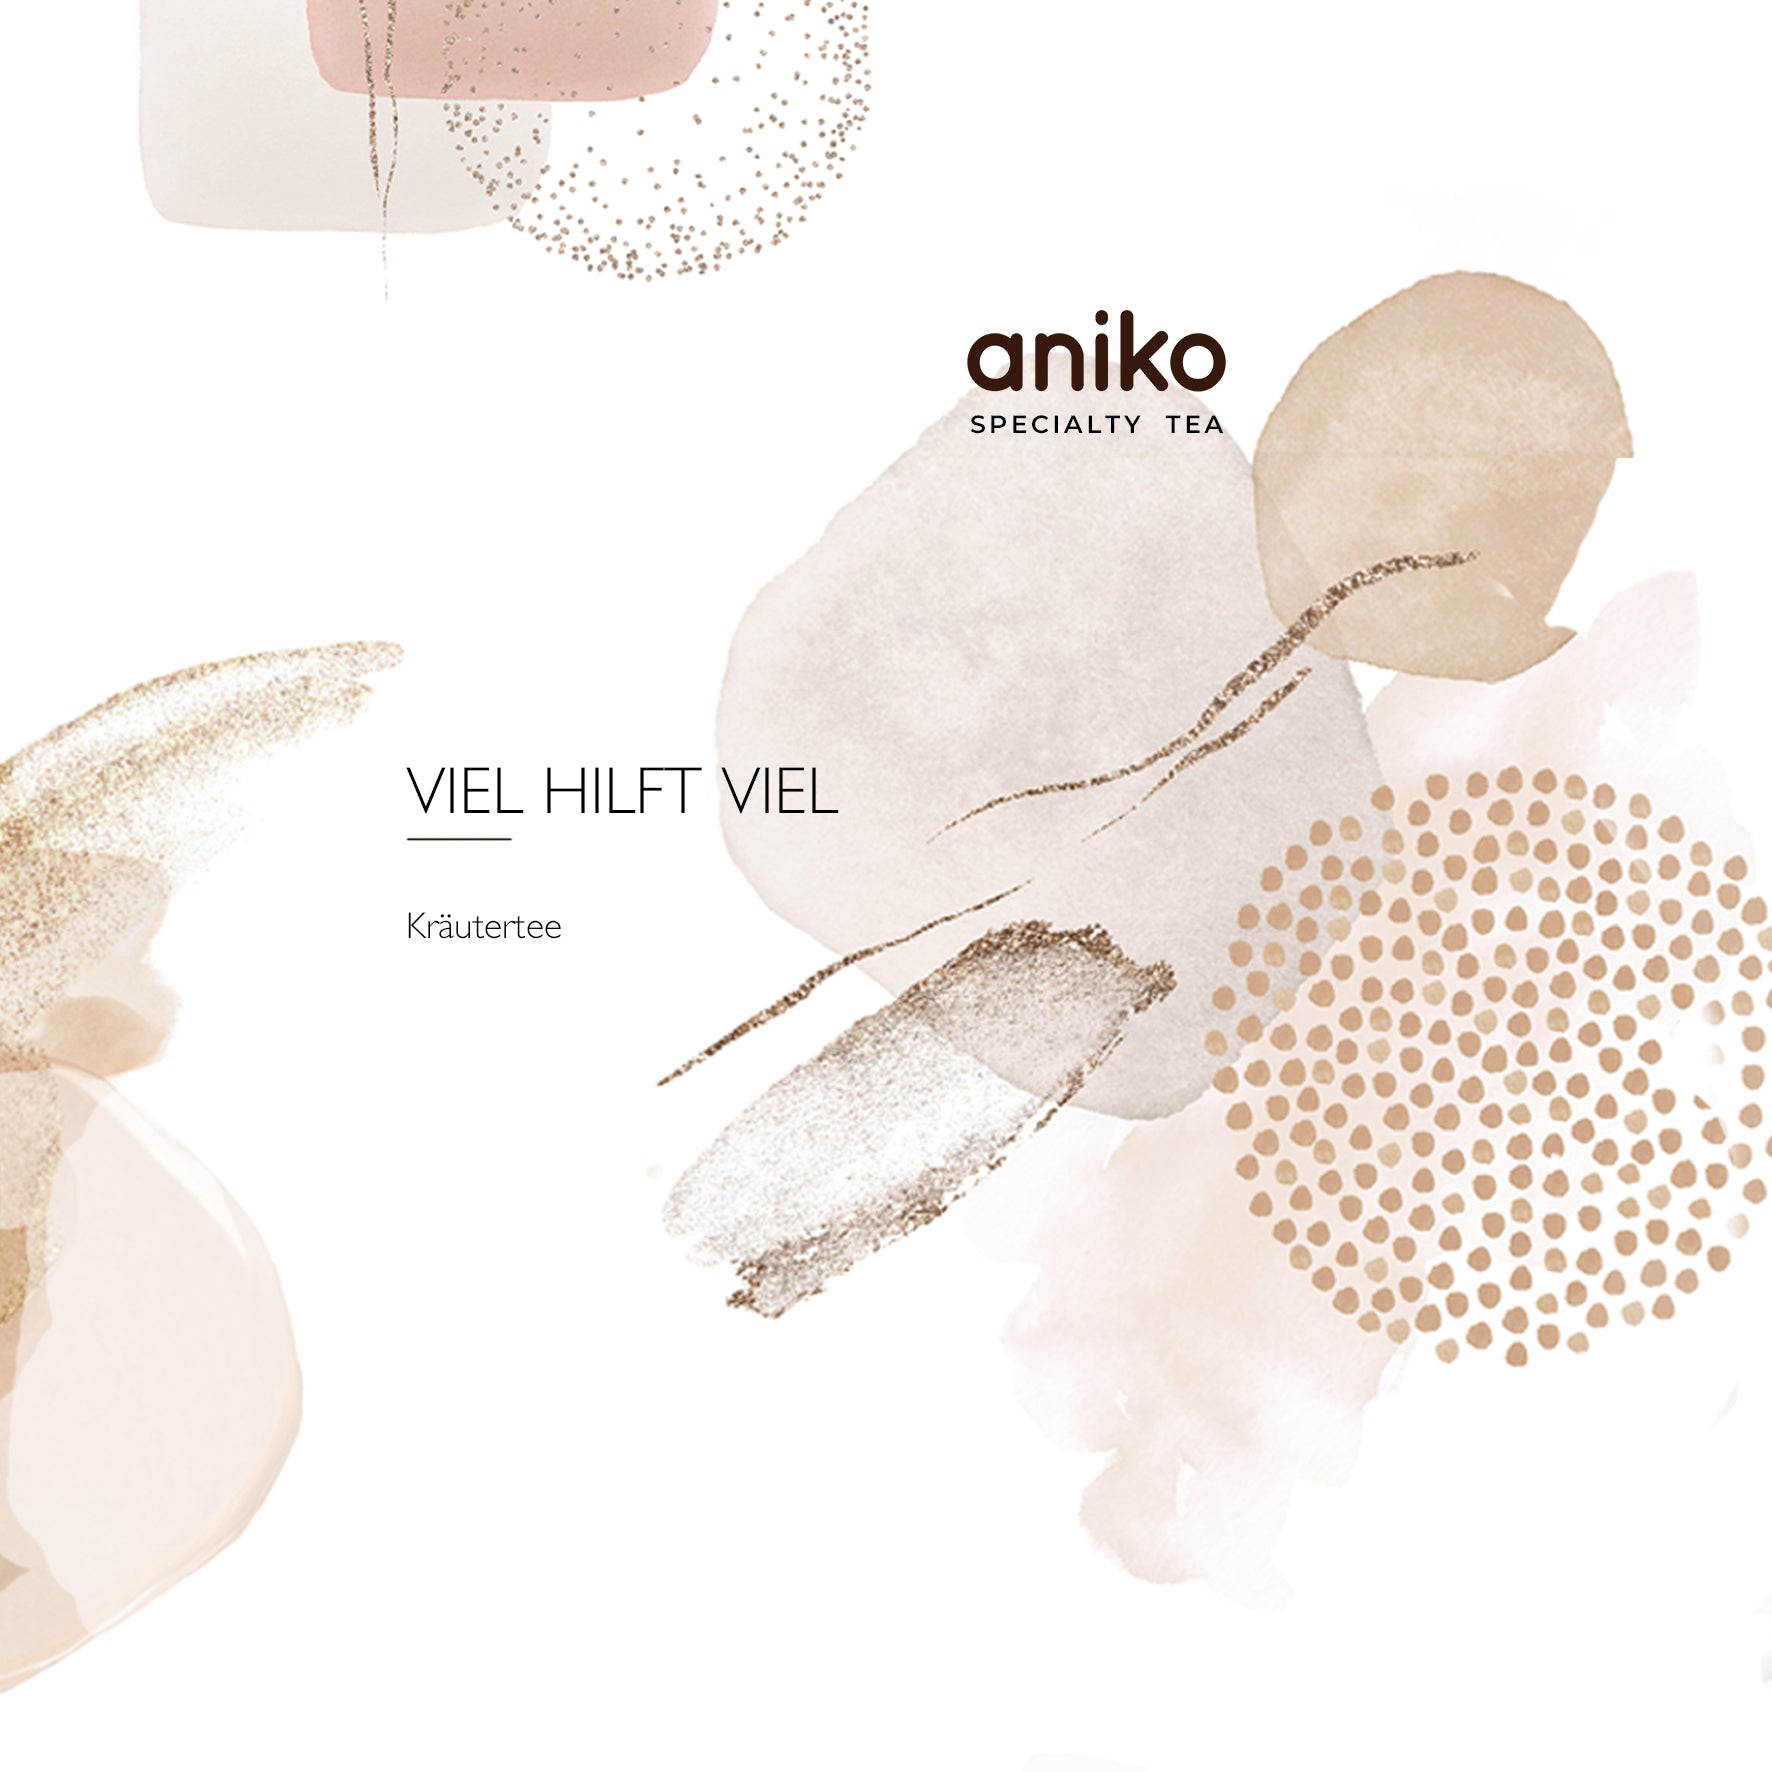 aniko Specialty Tea | A lot helps a lot